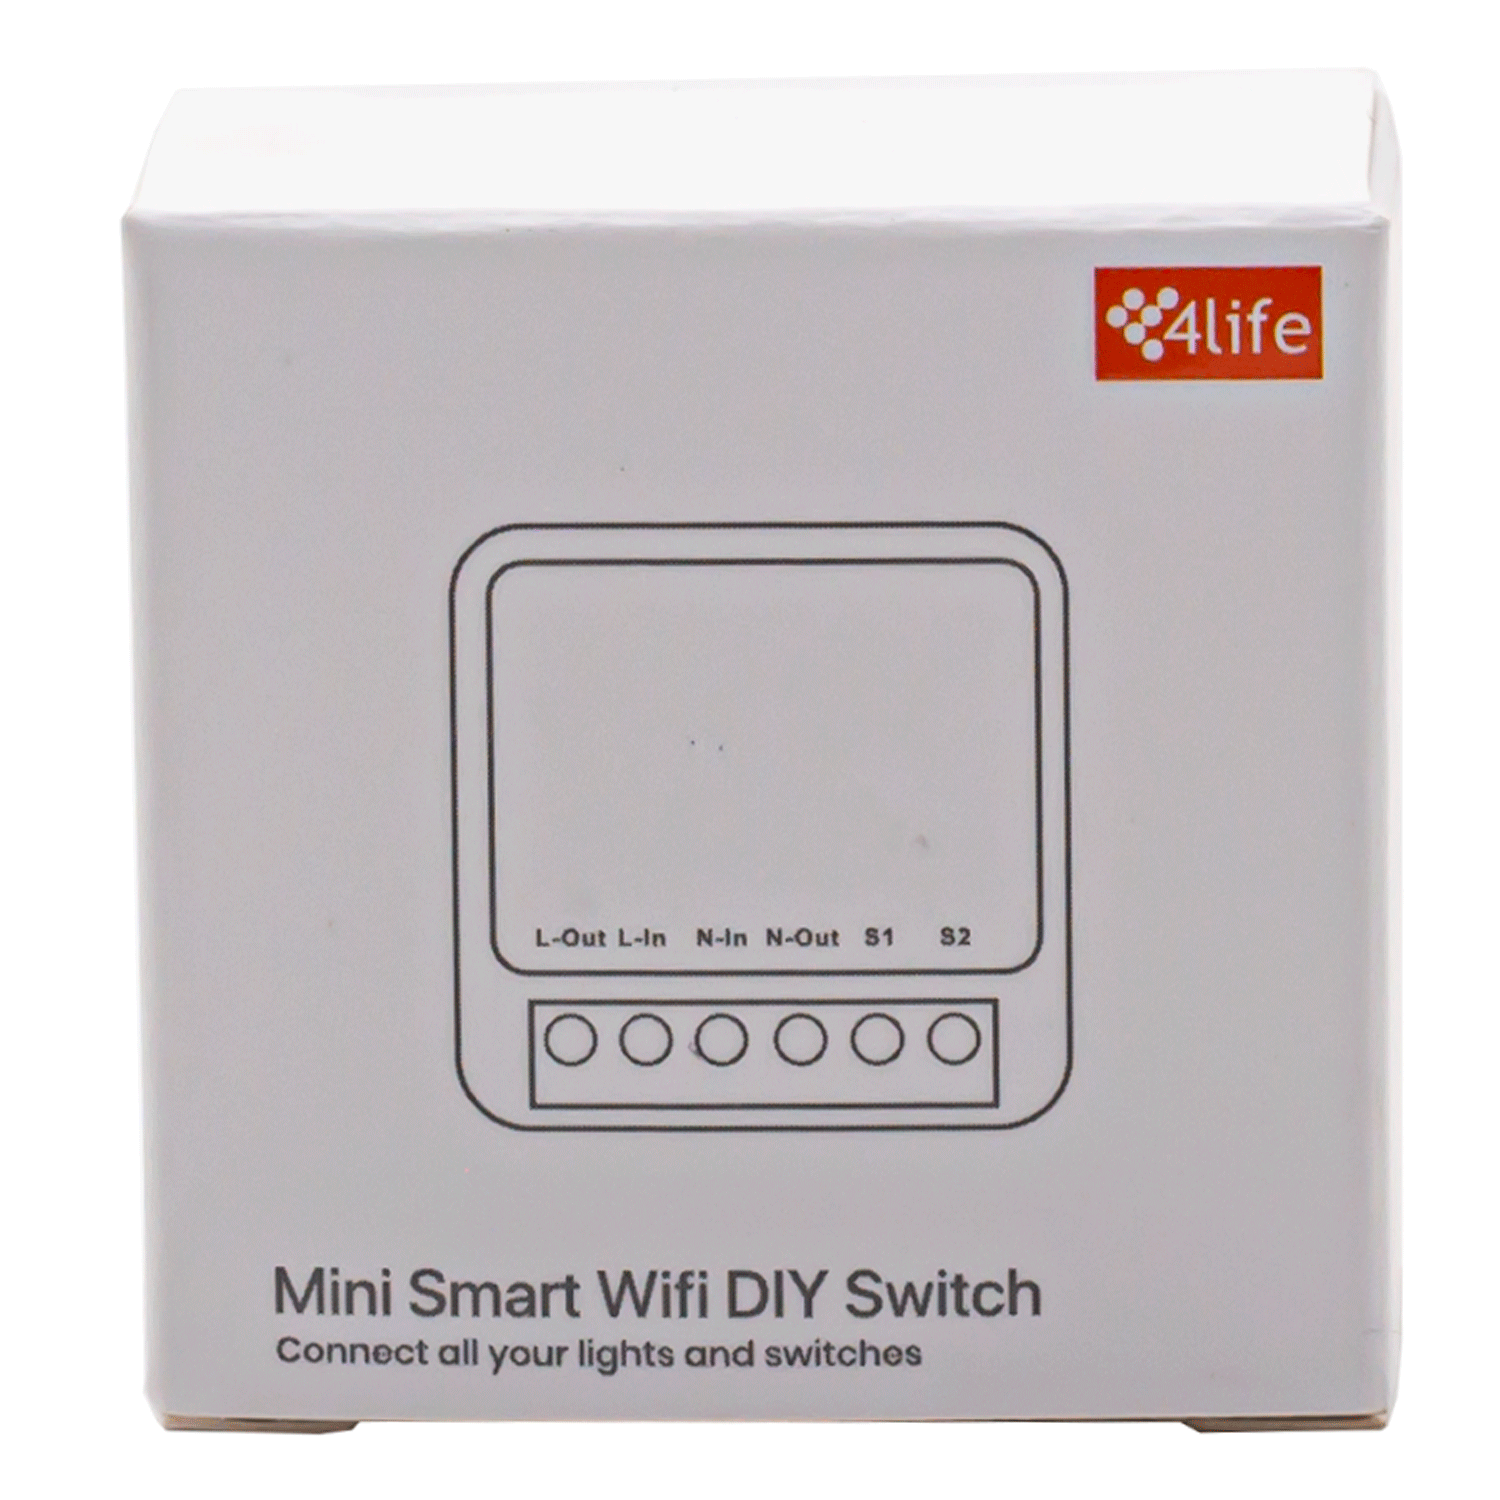 Interruptor Smart Switch 4life Mini DIY FLMINIR2G WiFi Bivolt - Branco 
